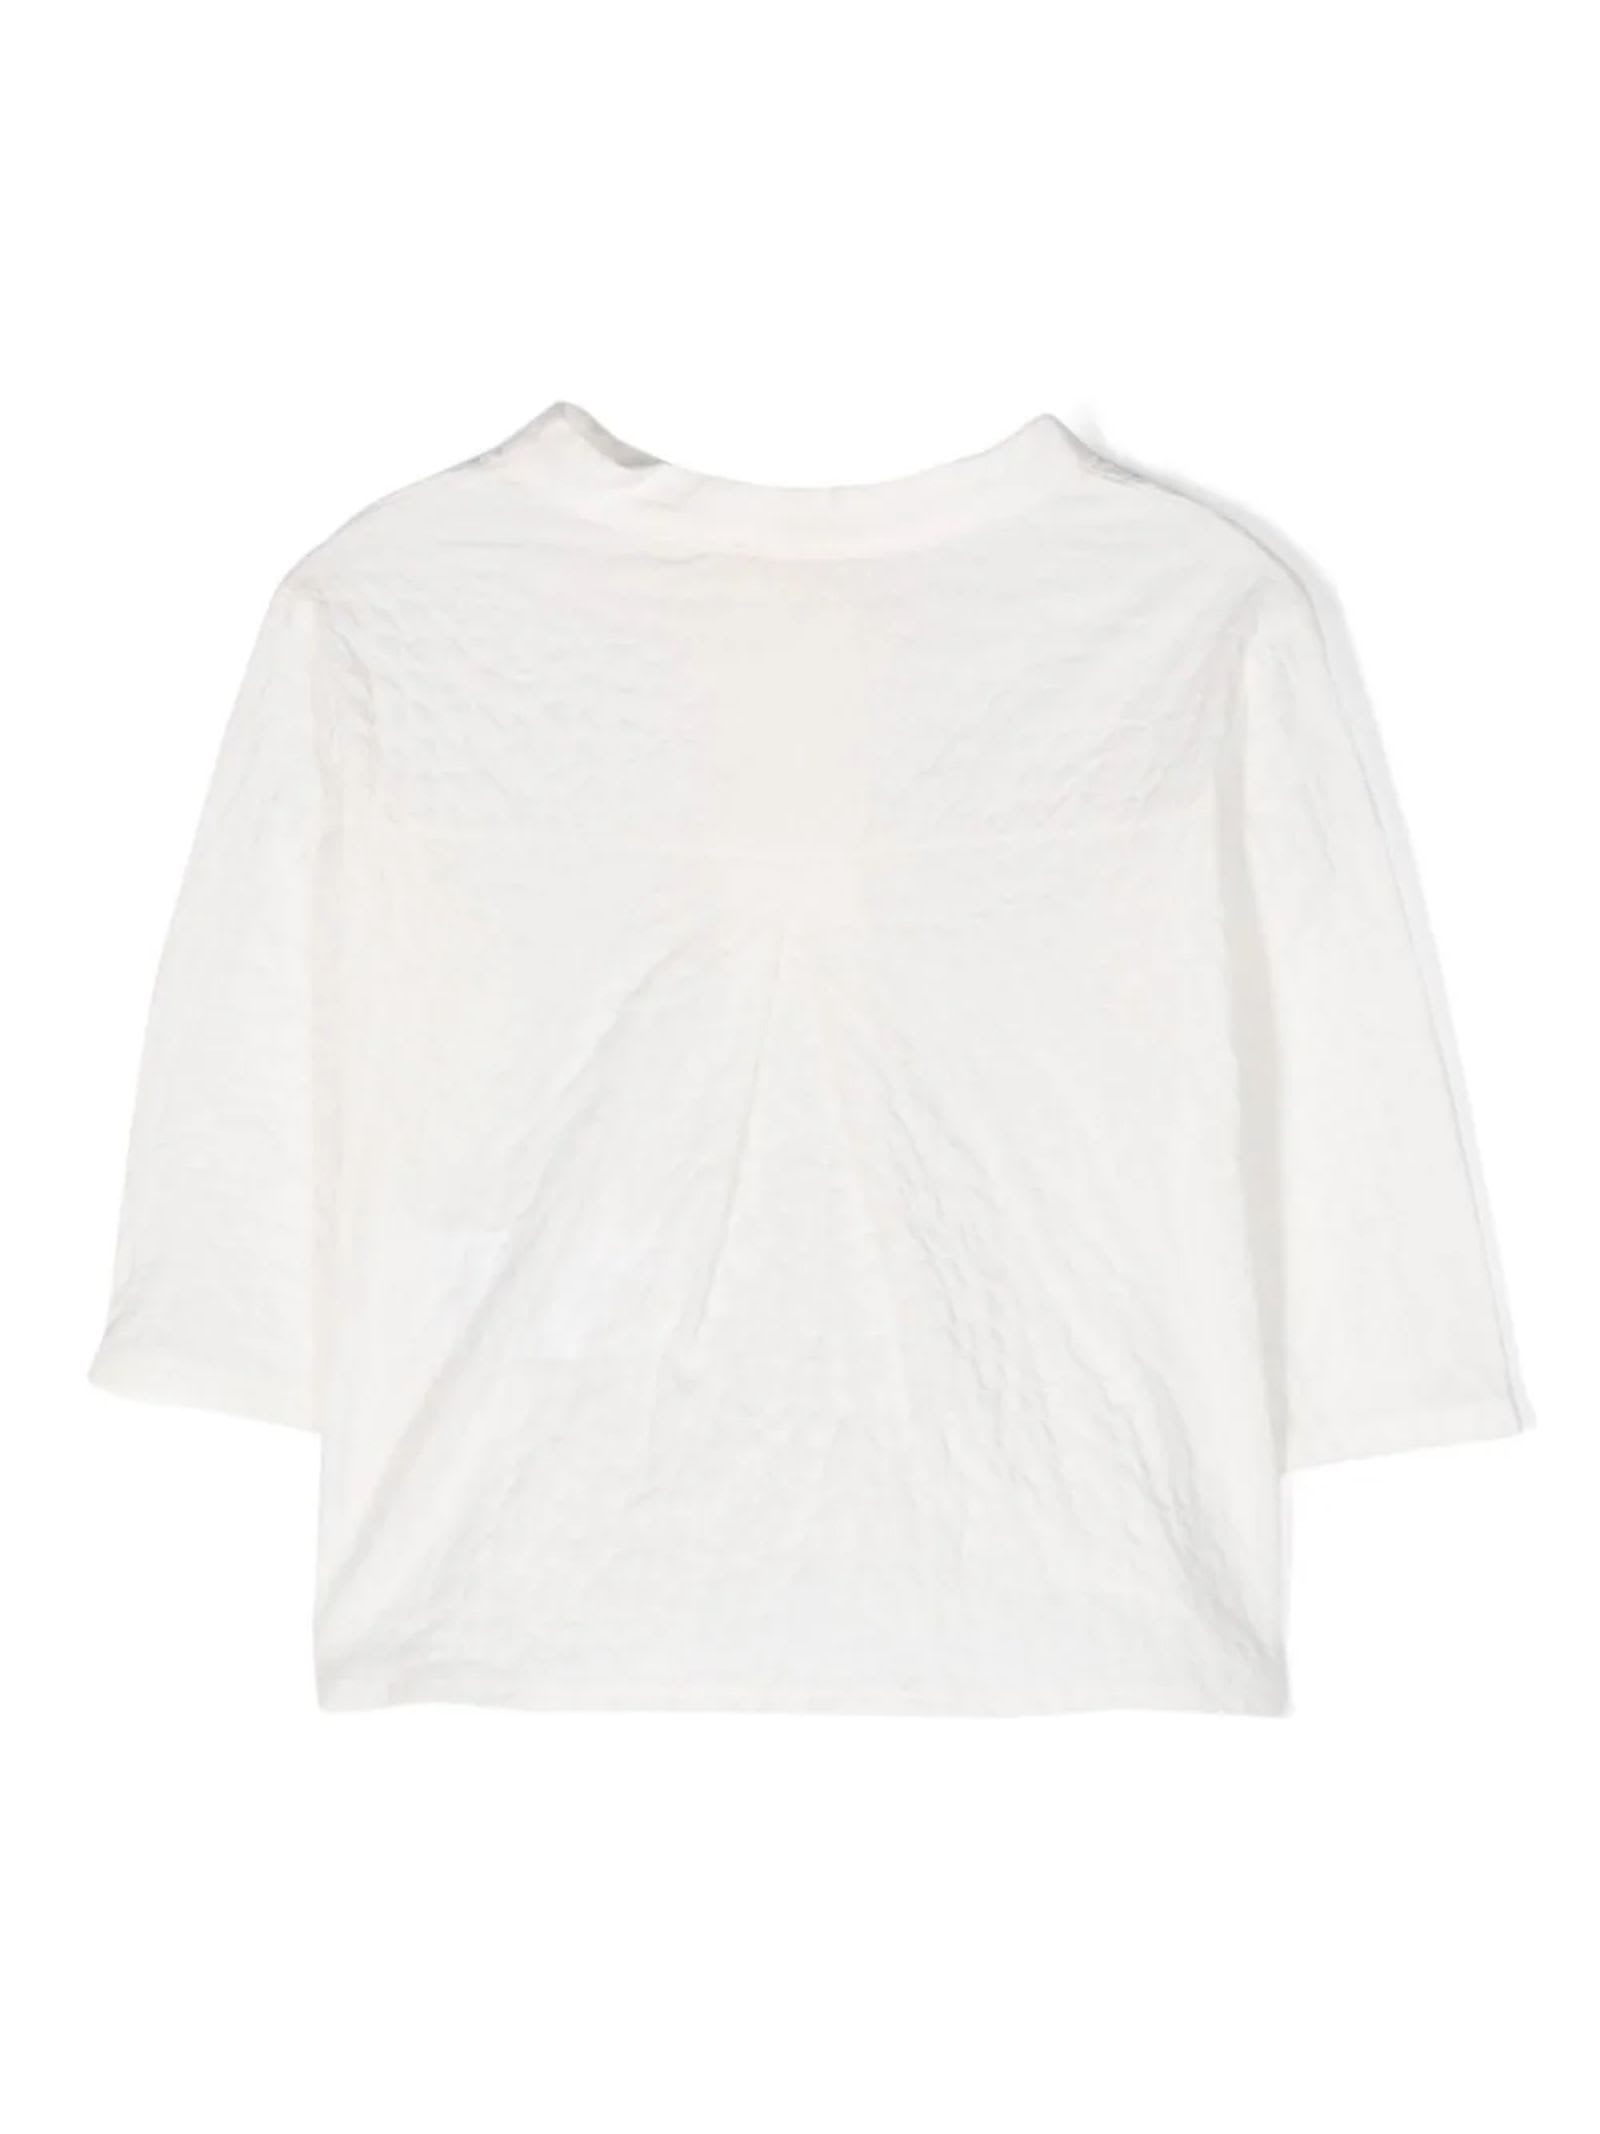 Shop Douuod Shirts White